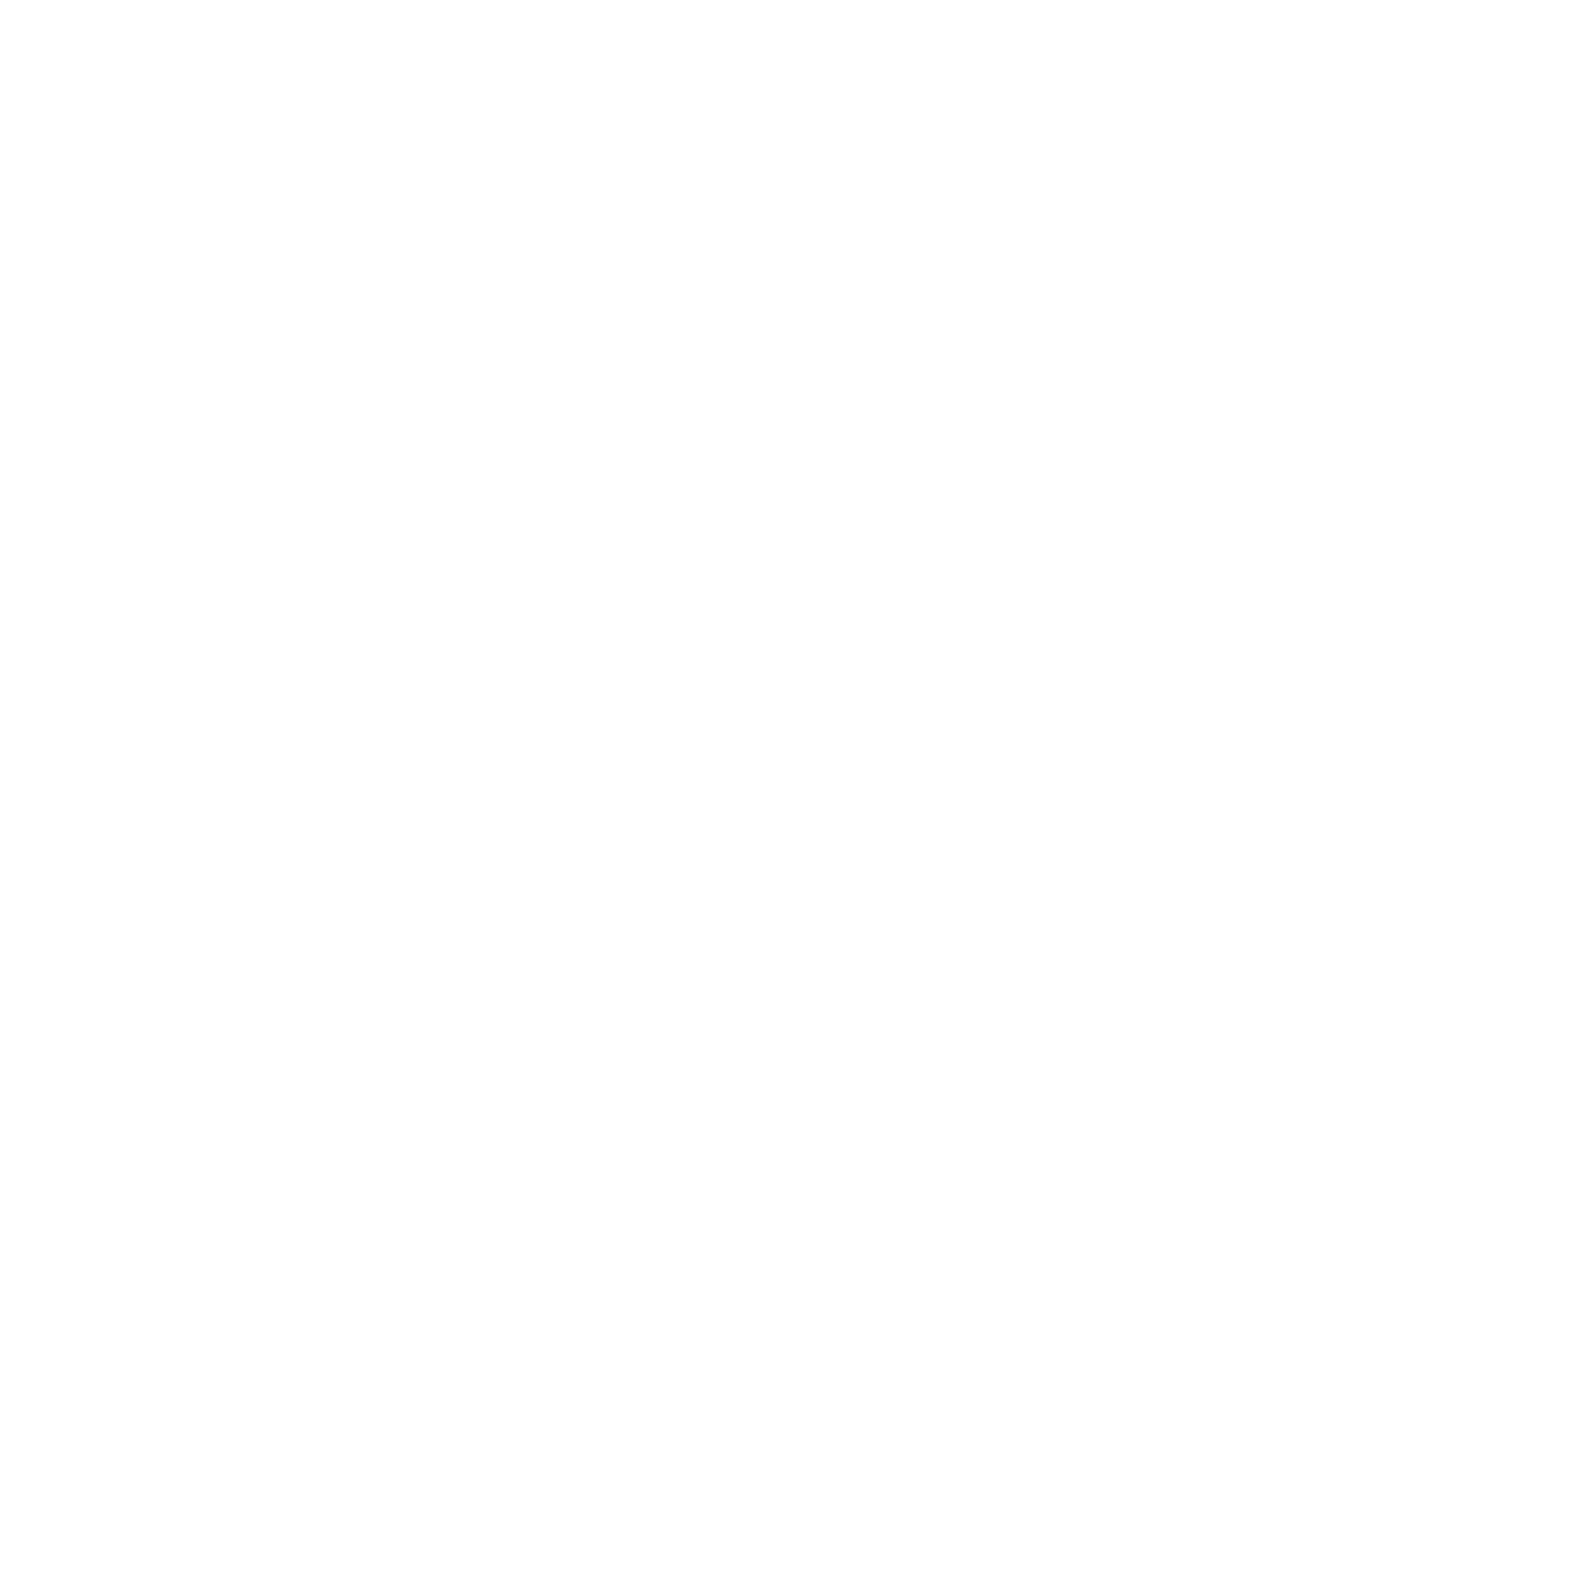 Eversource Energy logo for dark backgrounds (transparent PNG)